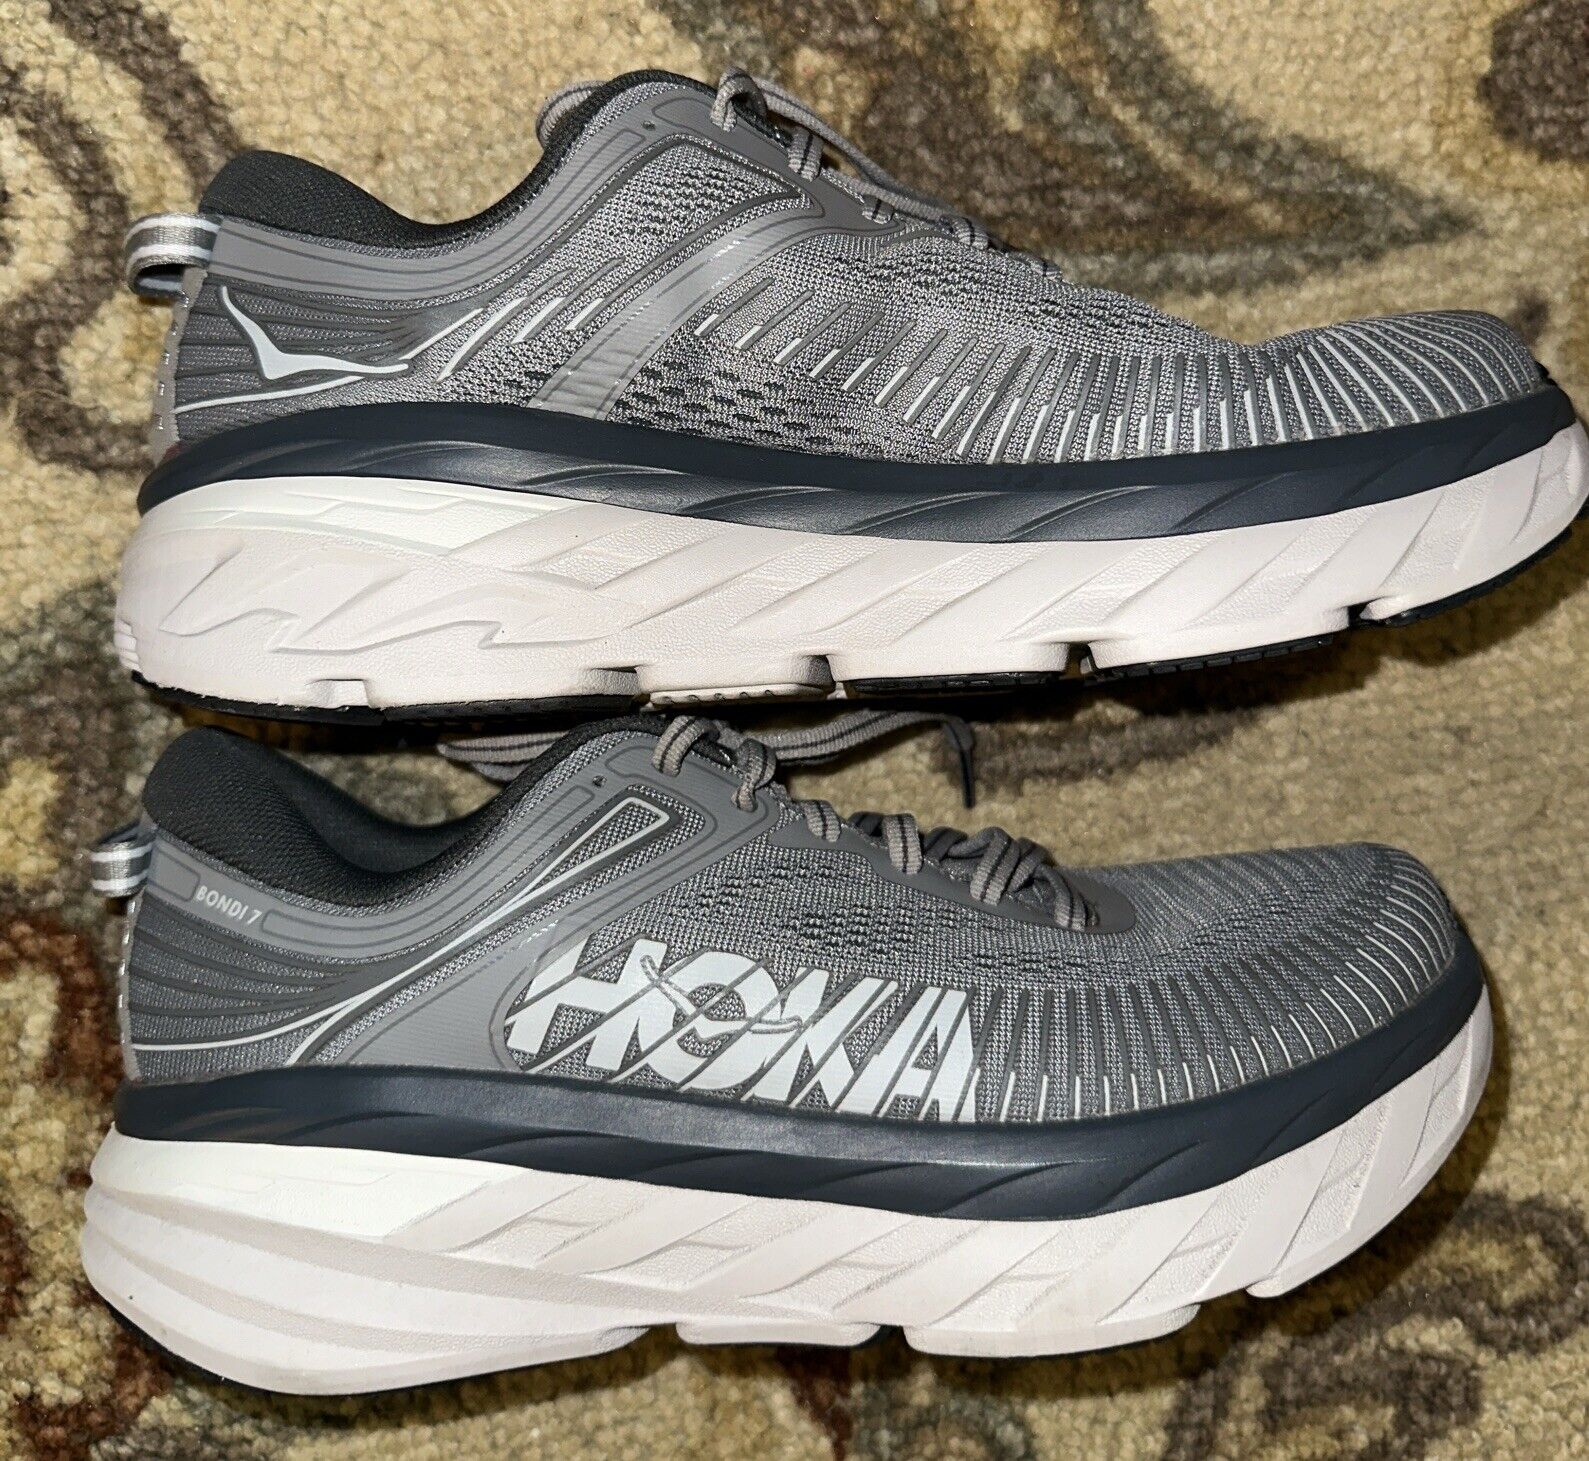 Hoka One One Mens Bondi  7 Wide Gray Running Shoes Sneakers Size 8 2E